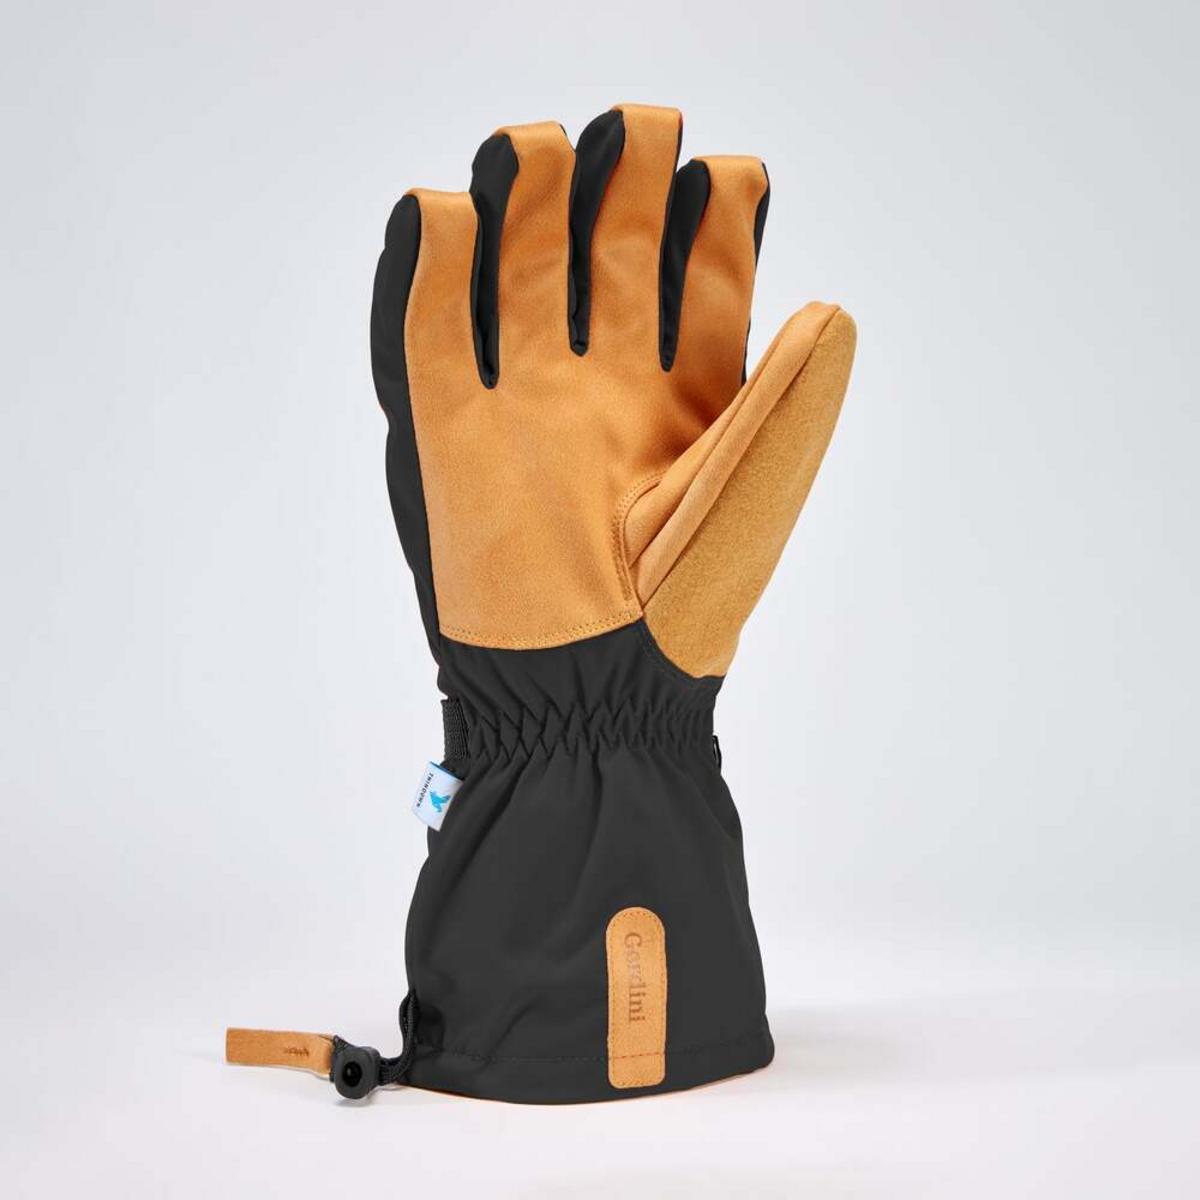 Gordini Men's Windward Gloves